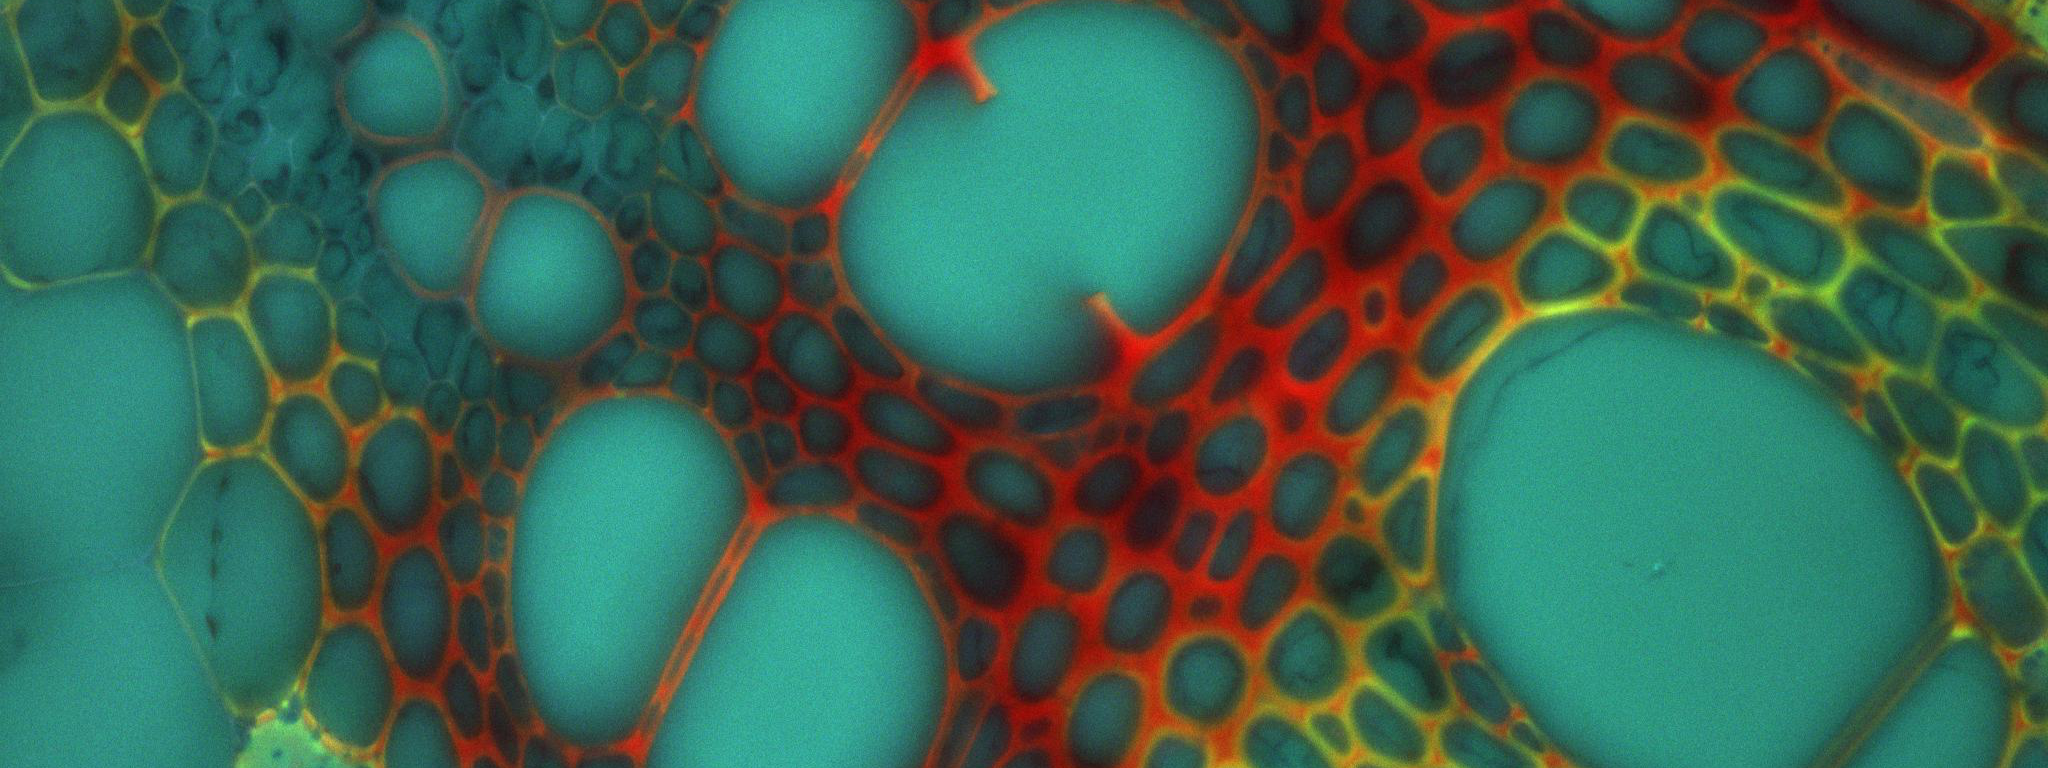 Microscopy image - credit Fernan Federici